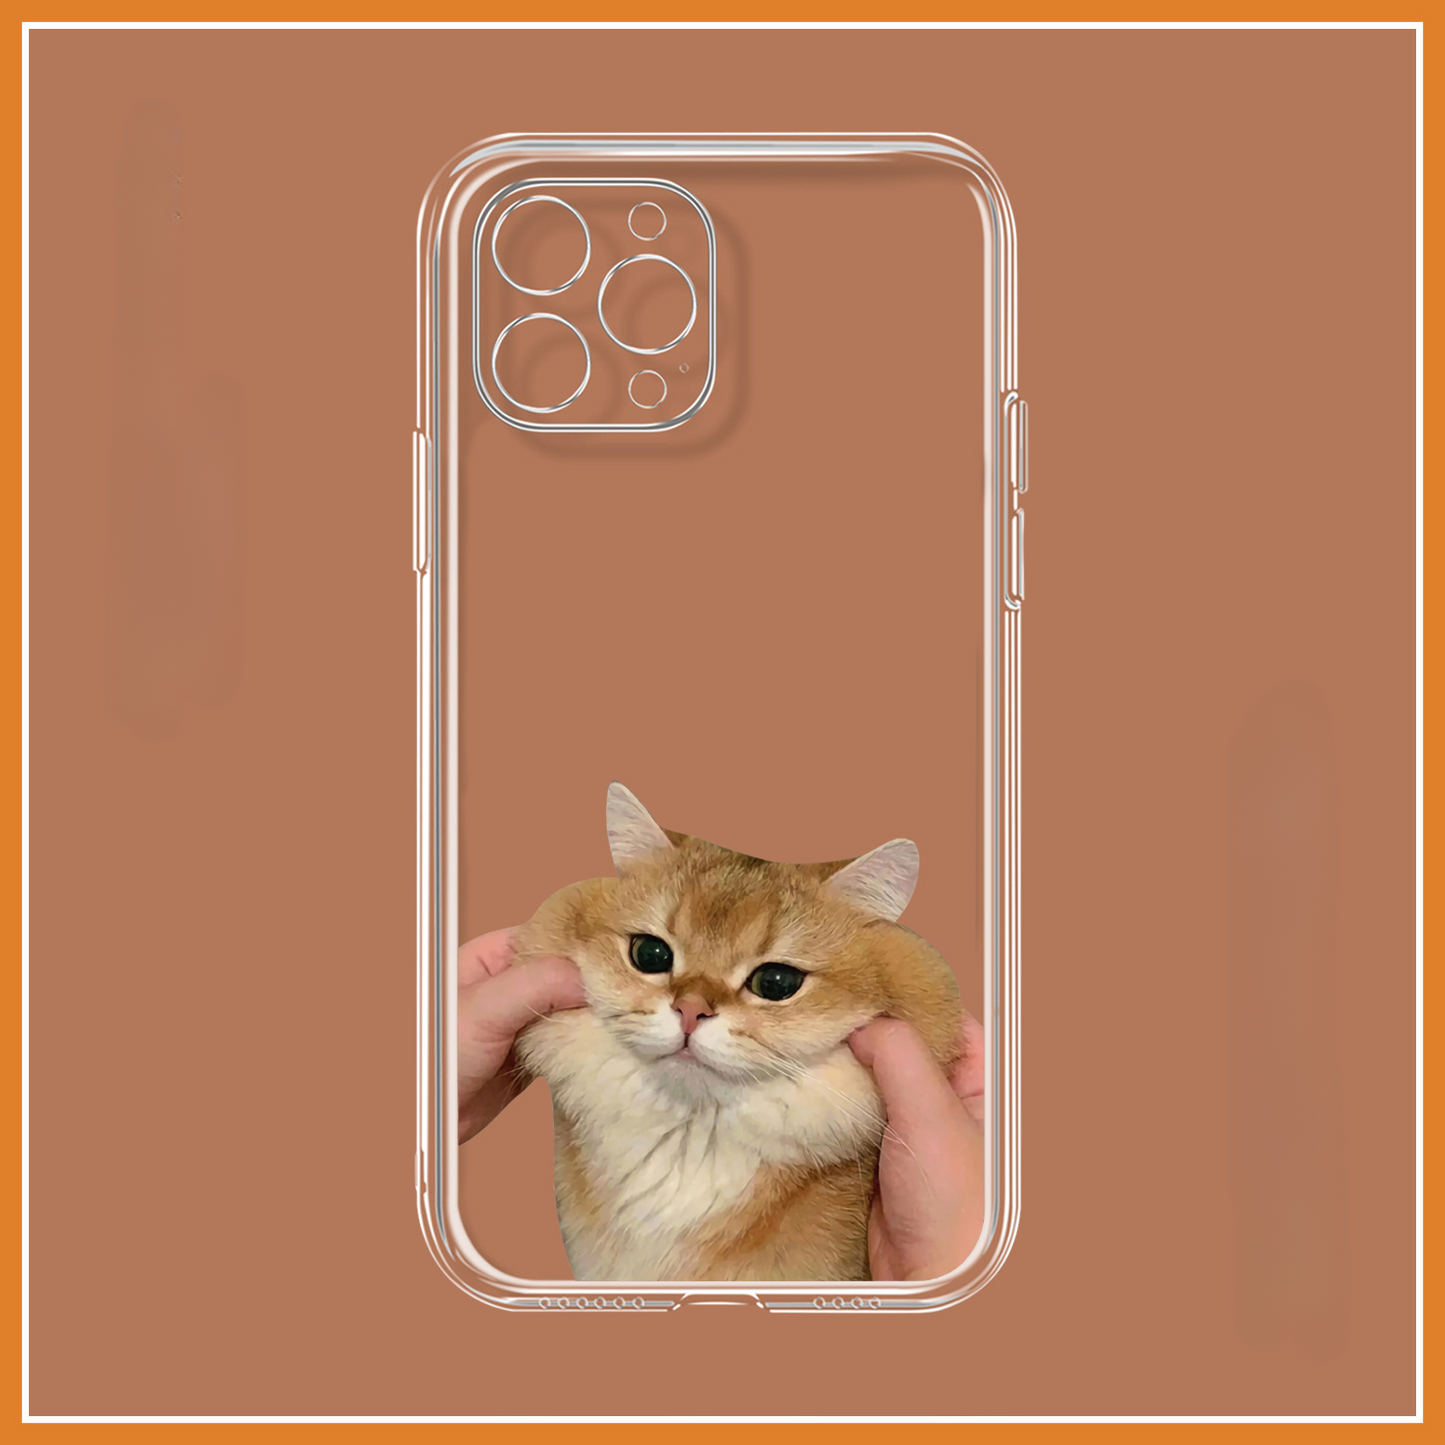 [ Meme Case ] Pinch face cat and dog phone case